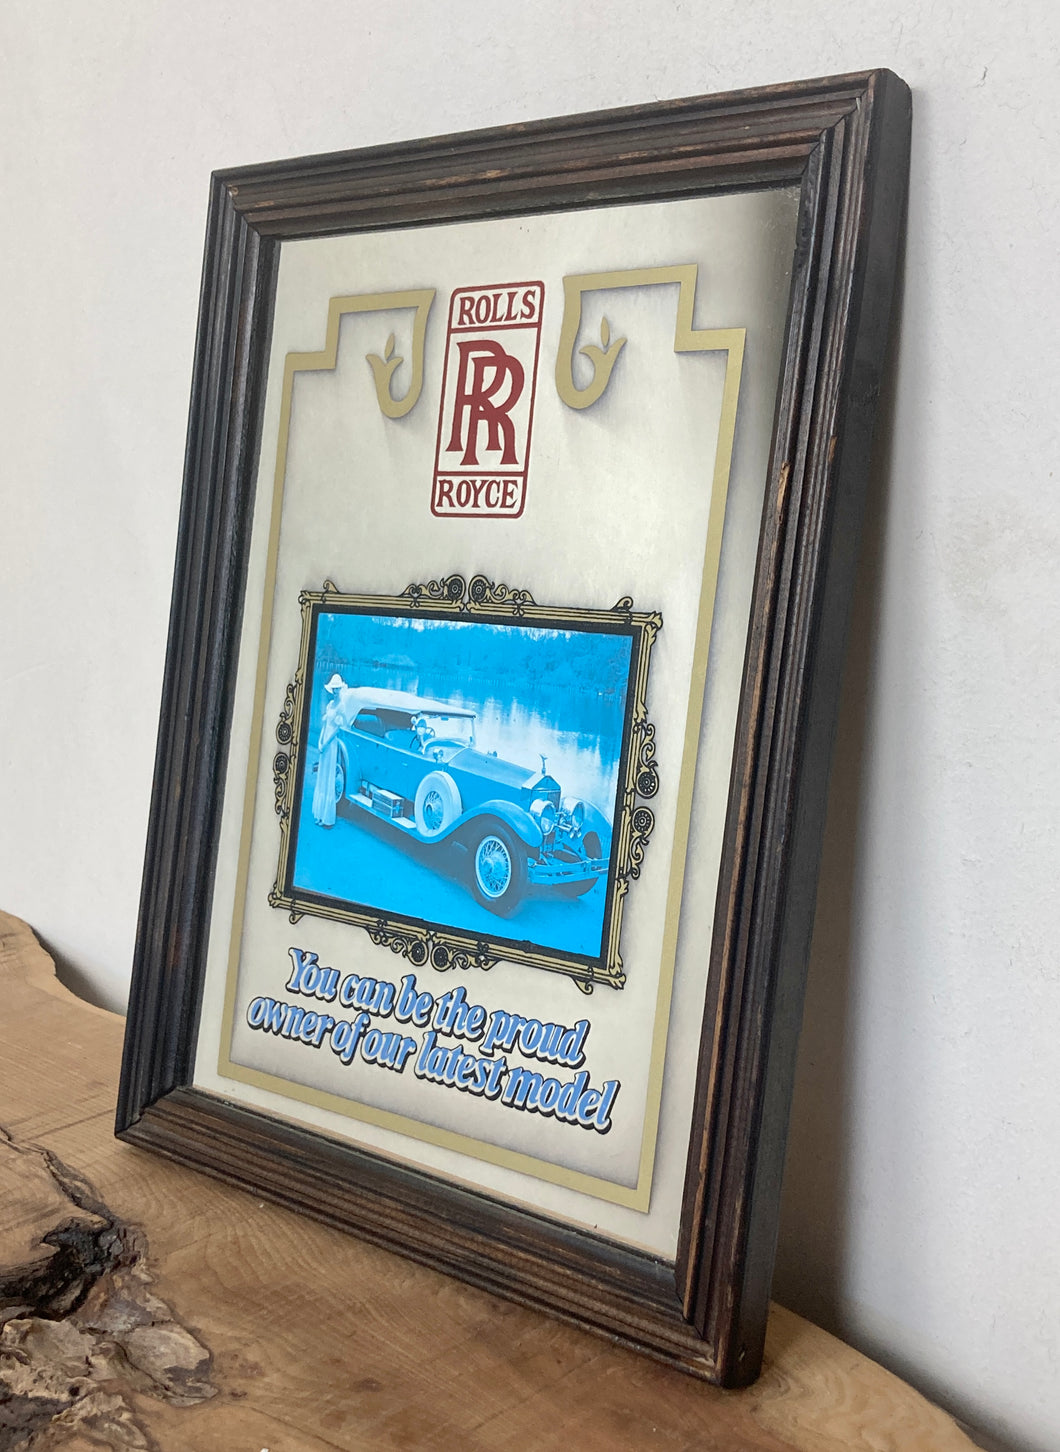 Great vintage Rolls Royce mirror automotive car advertising collectibles piece